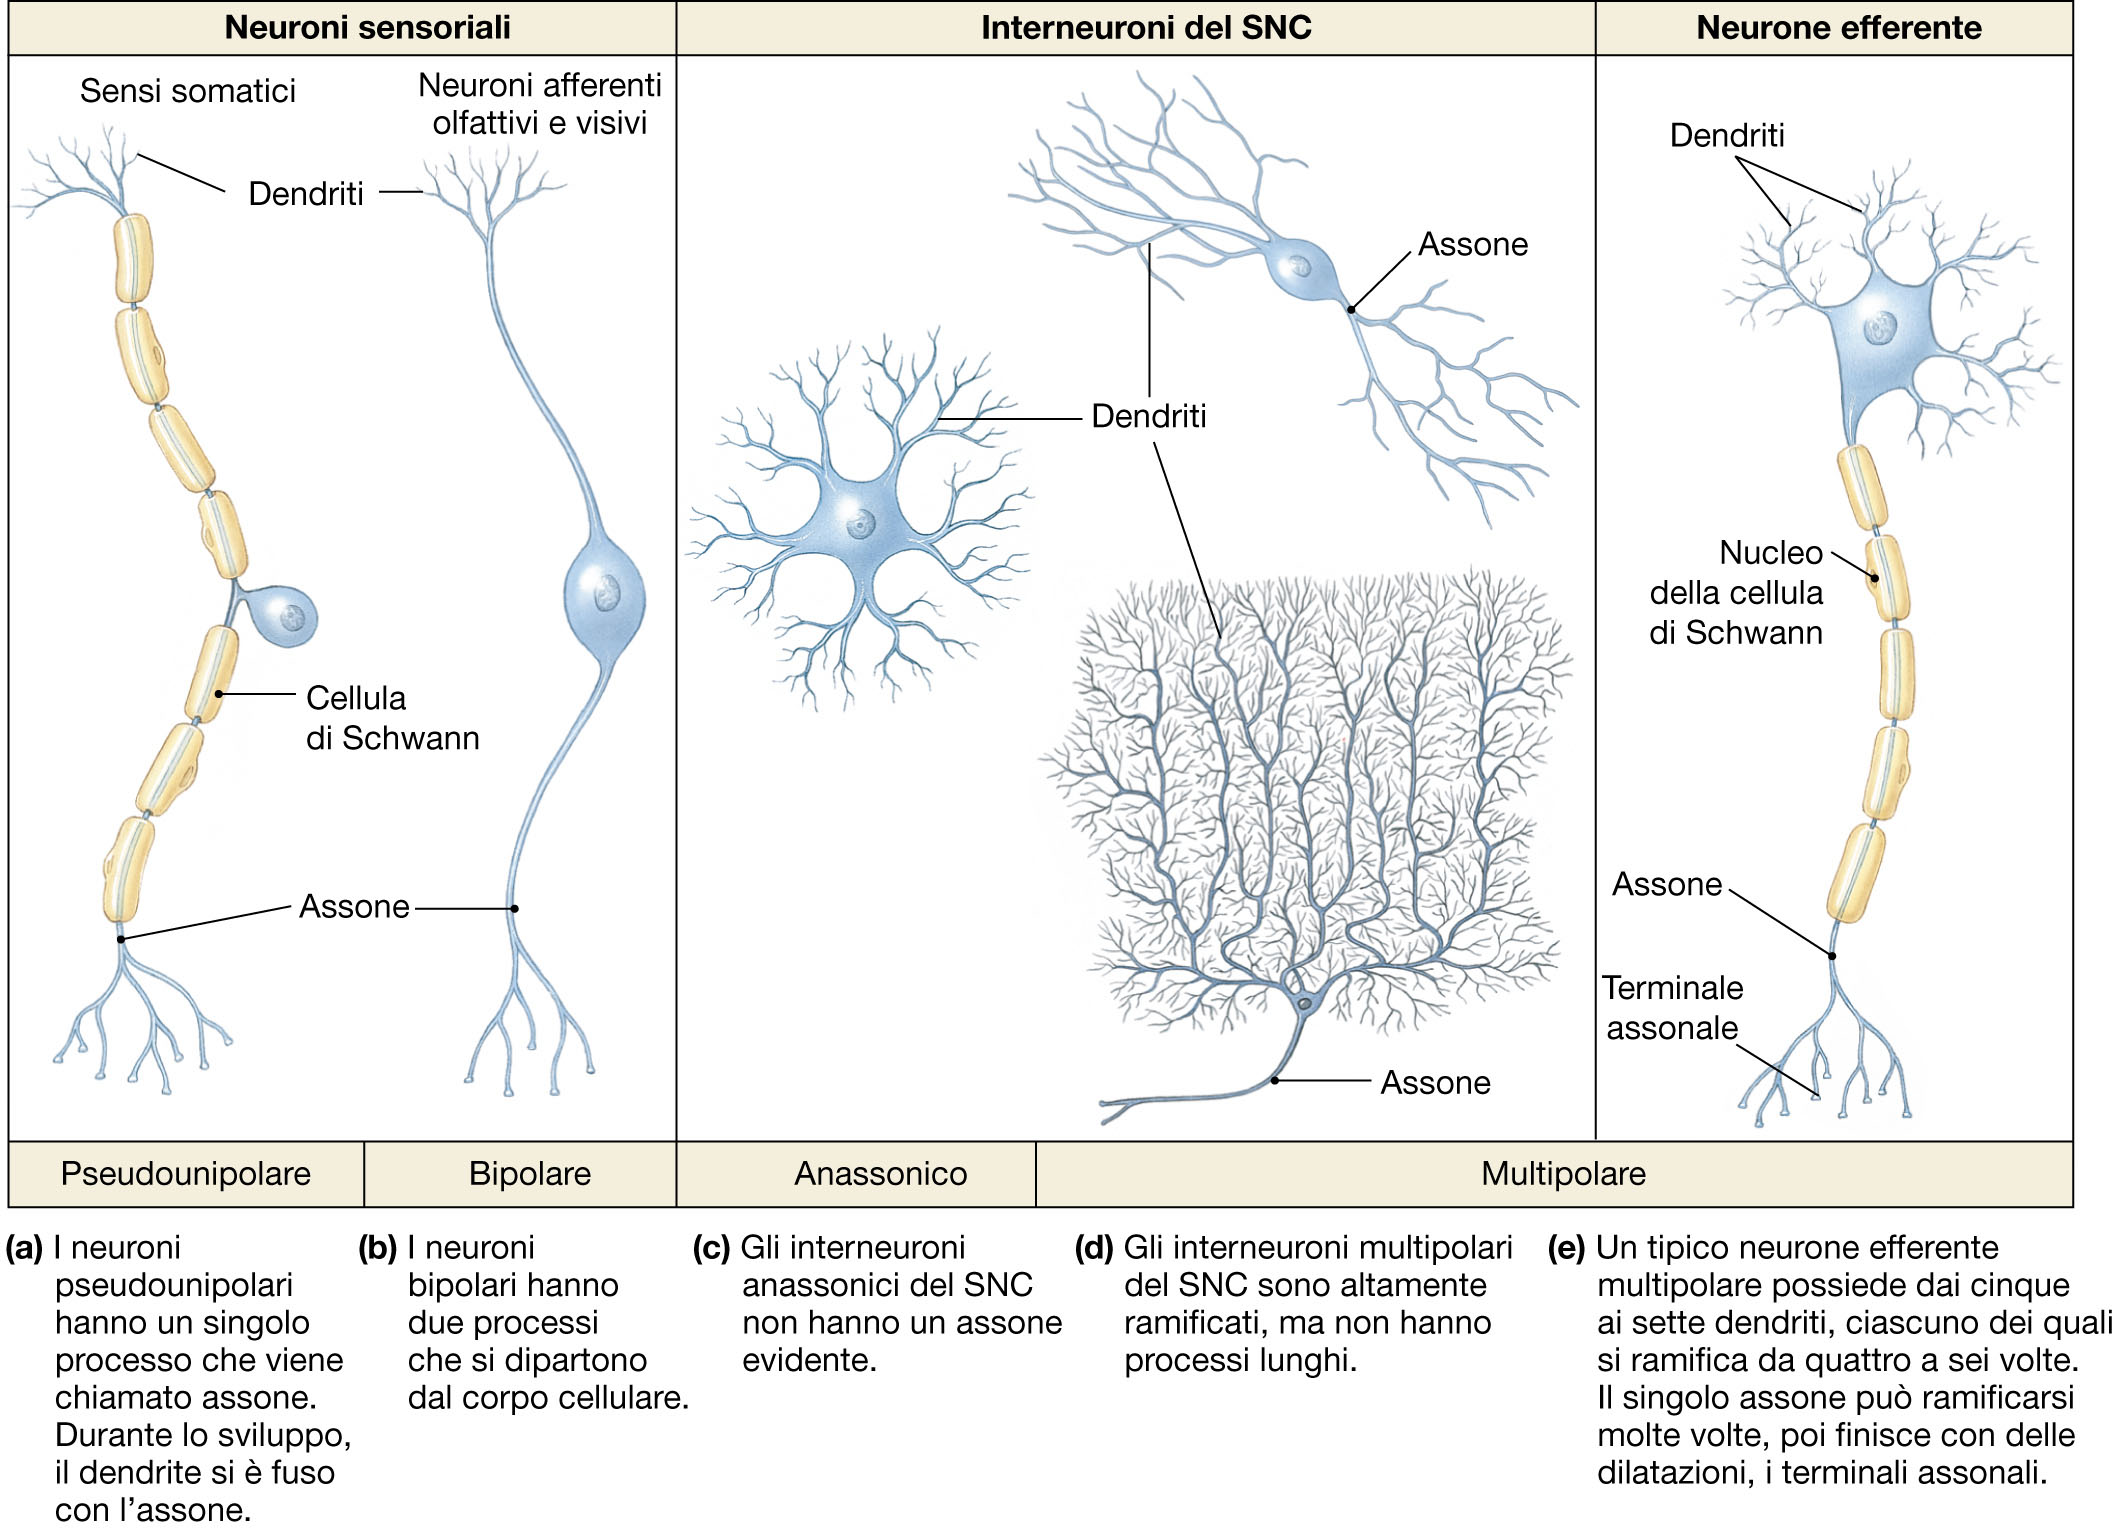 I neuroni